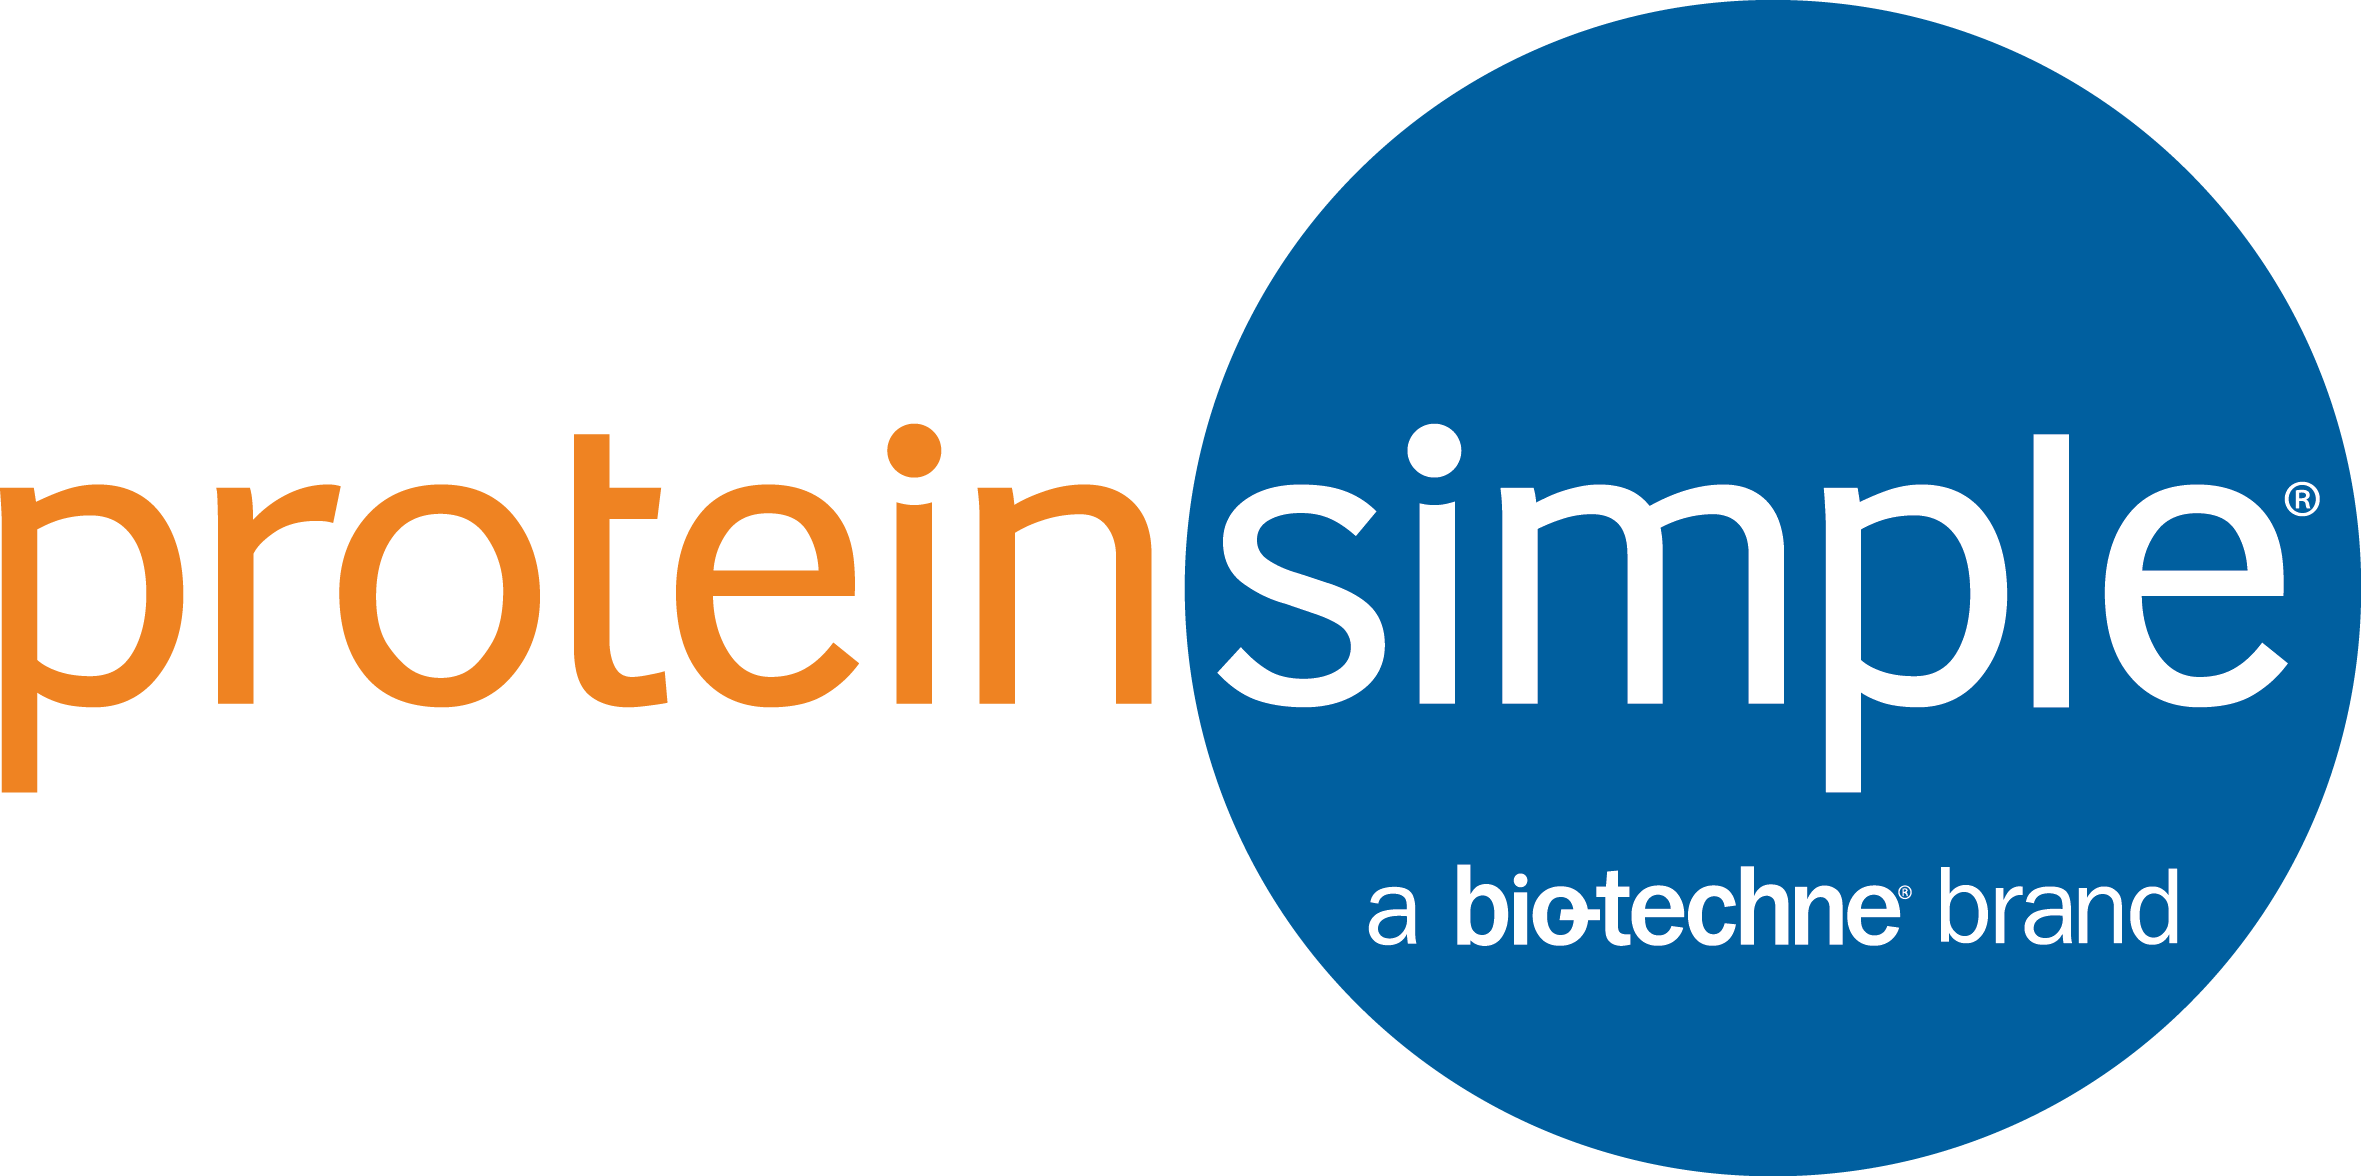 ProteinSimple BT logo 2015 high rez